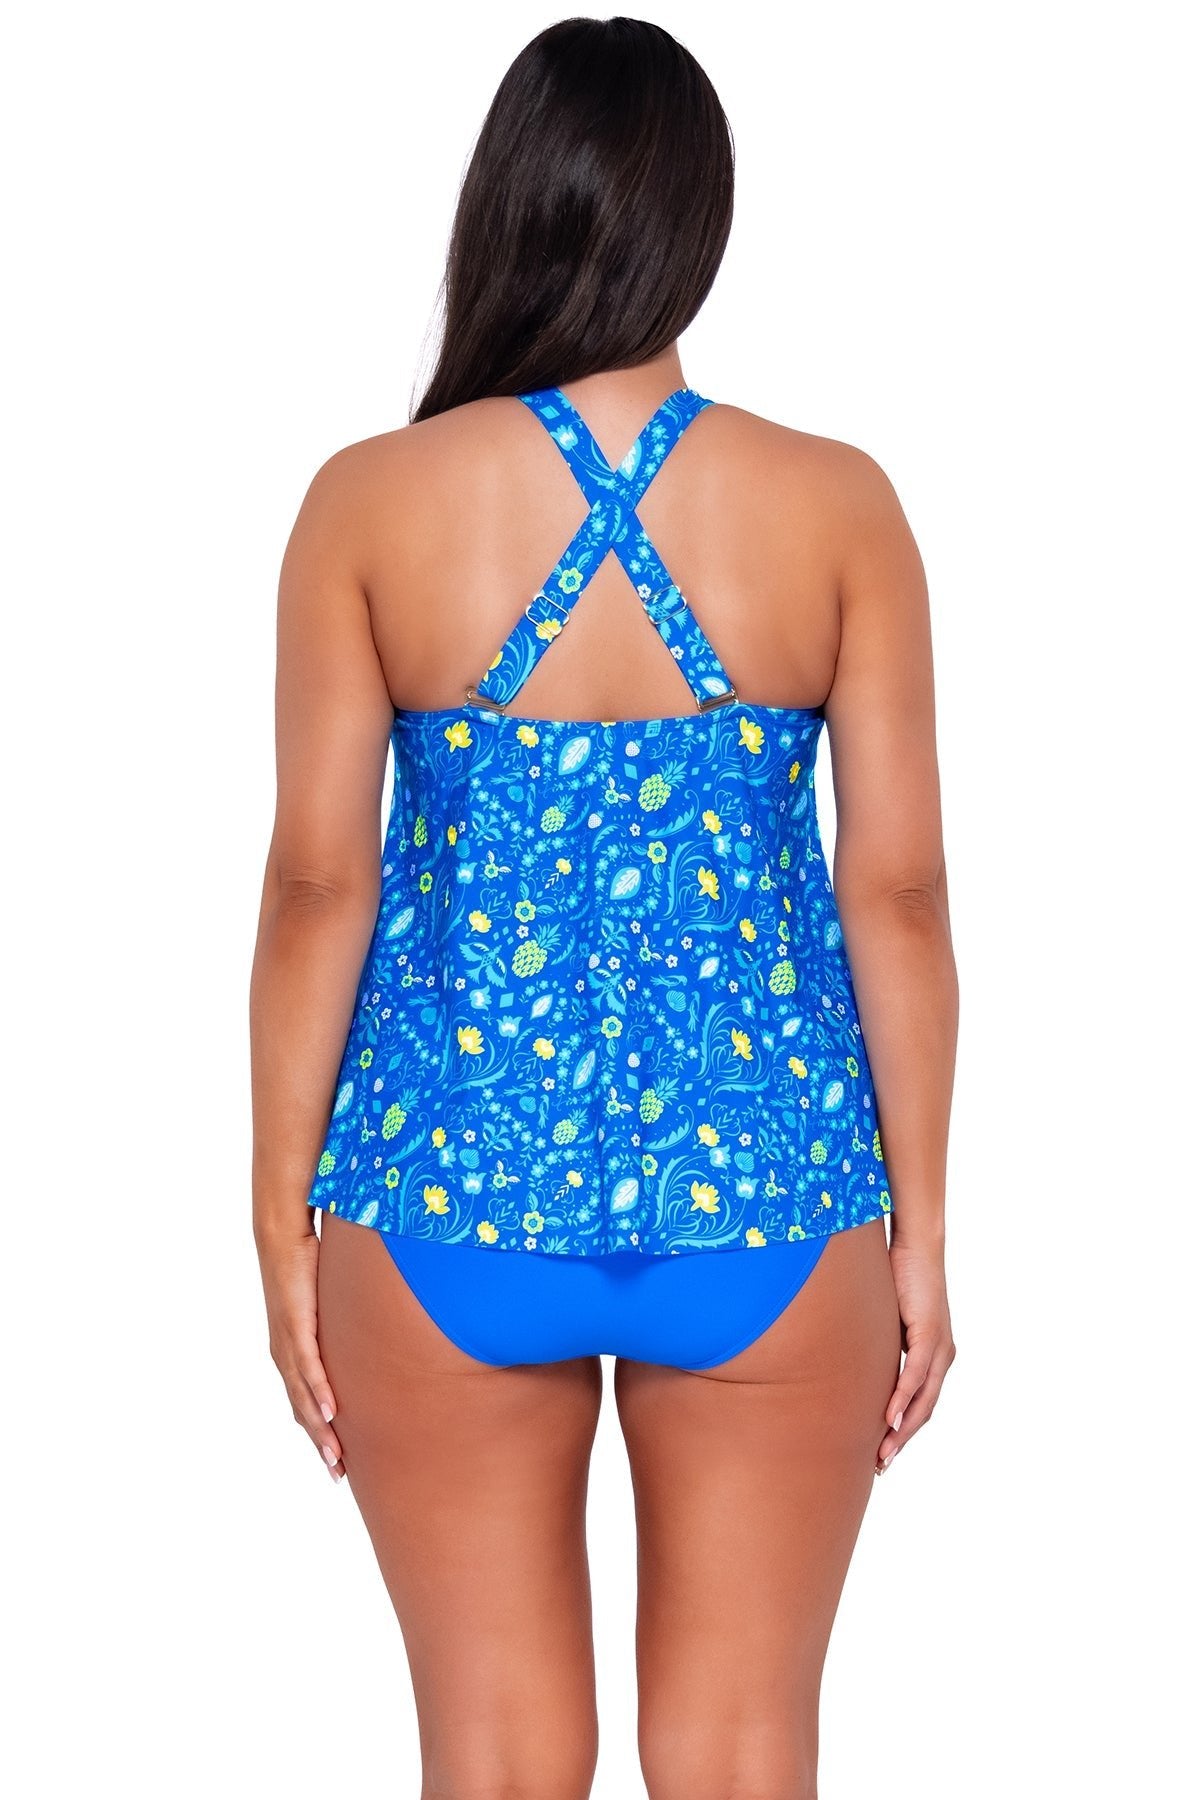 Sunsets Women's Swimwear Escape Pineapple Grove Sadie Tankini Bikini Top